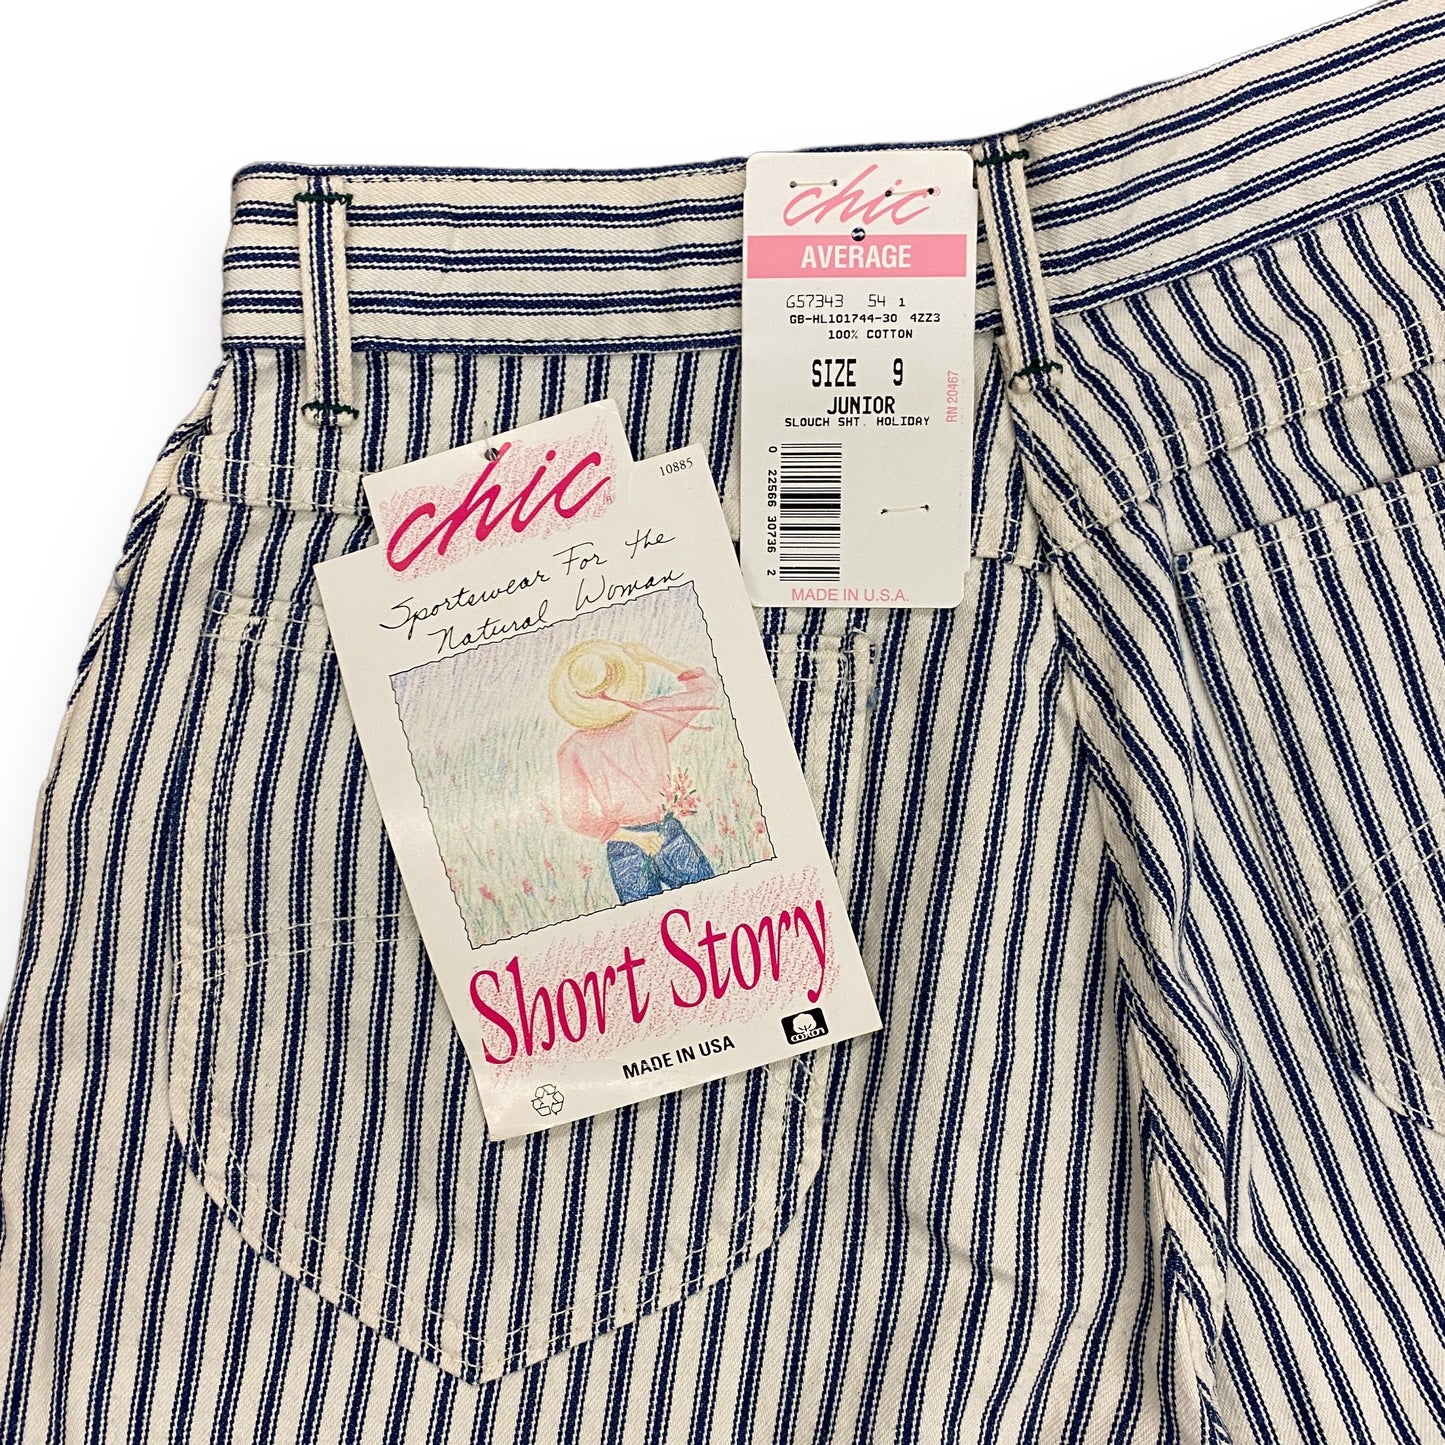 1980s Railroad Stripe High-Waisted Shorts - 27"x7"